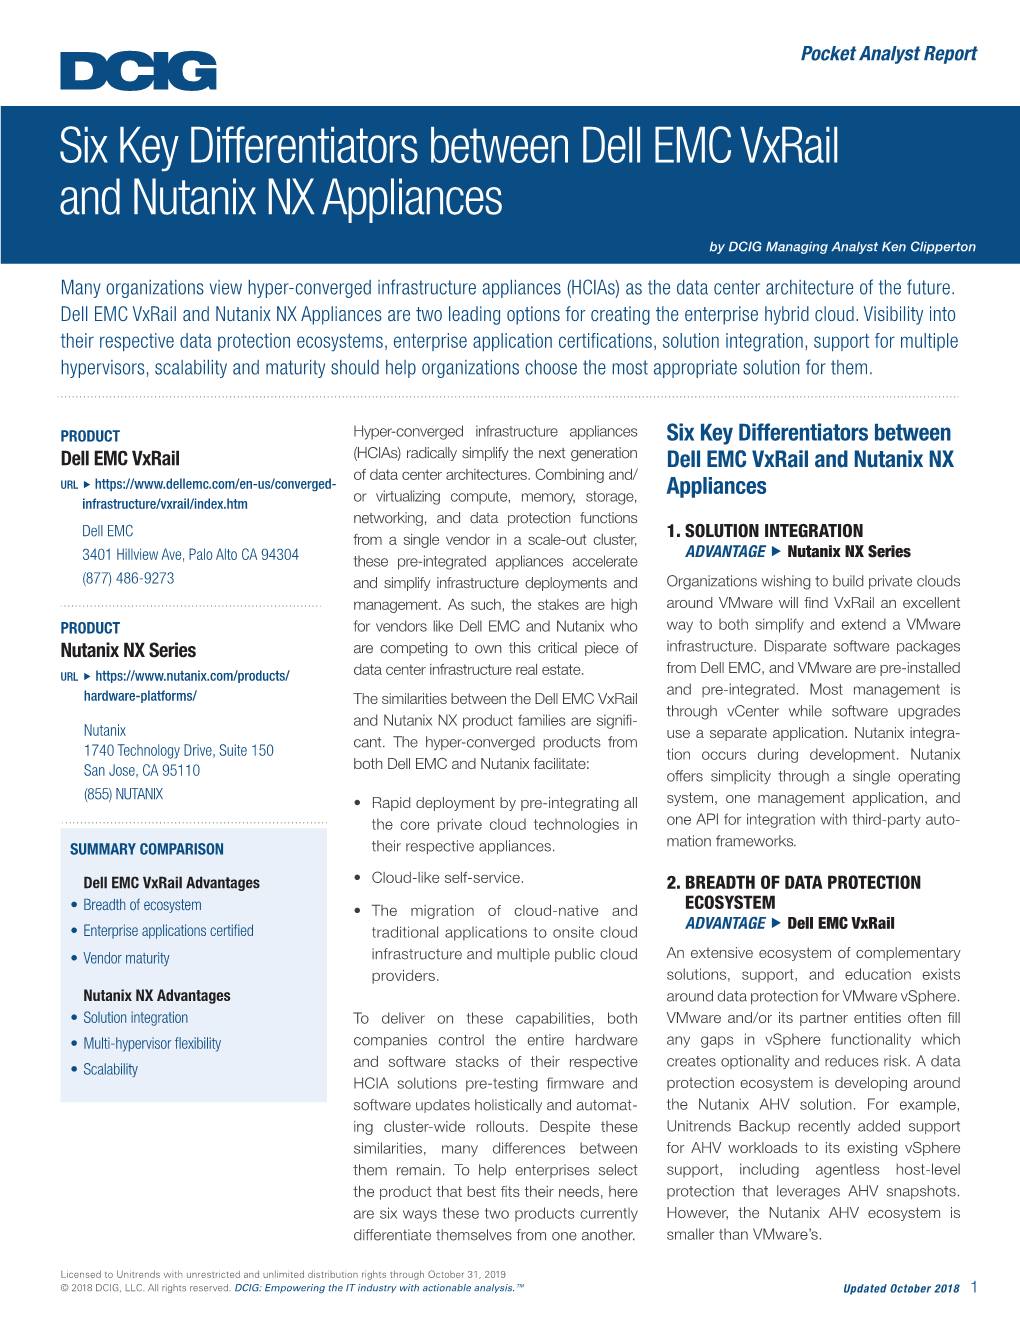 Six Key Differentiators Between Dell EMC Vxrail and Nutanix NX Appliances